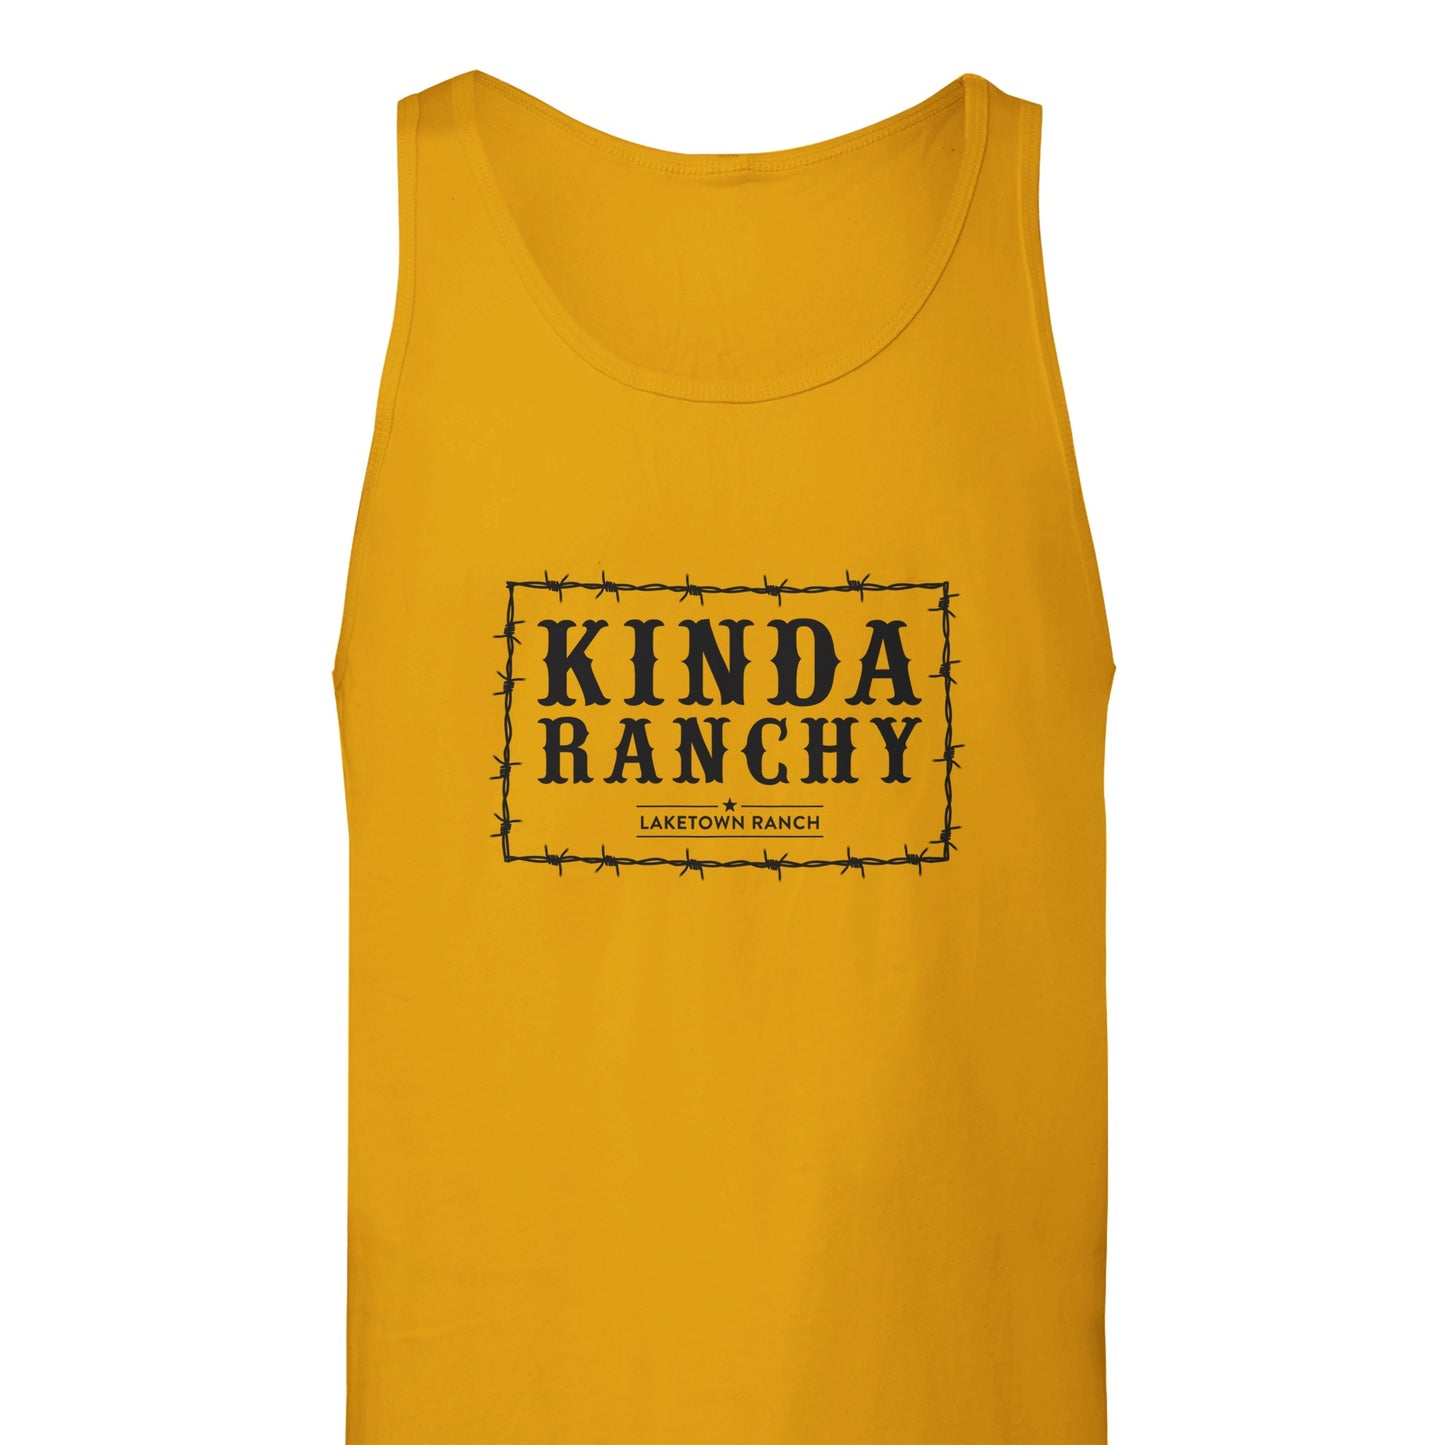 Laketown Ranch - Kinda Ranchy - Premium Unisex Tank Top